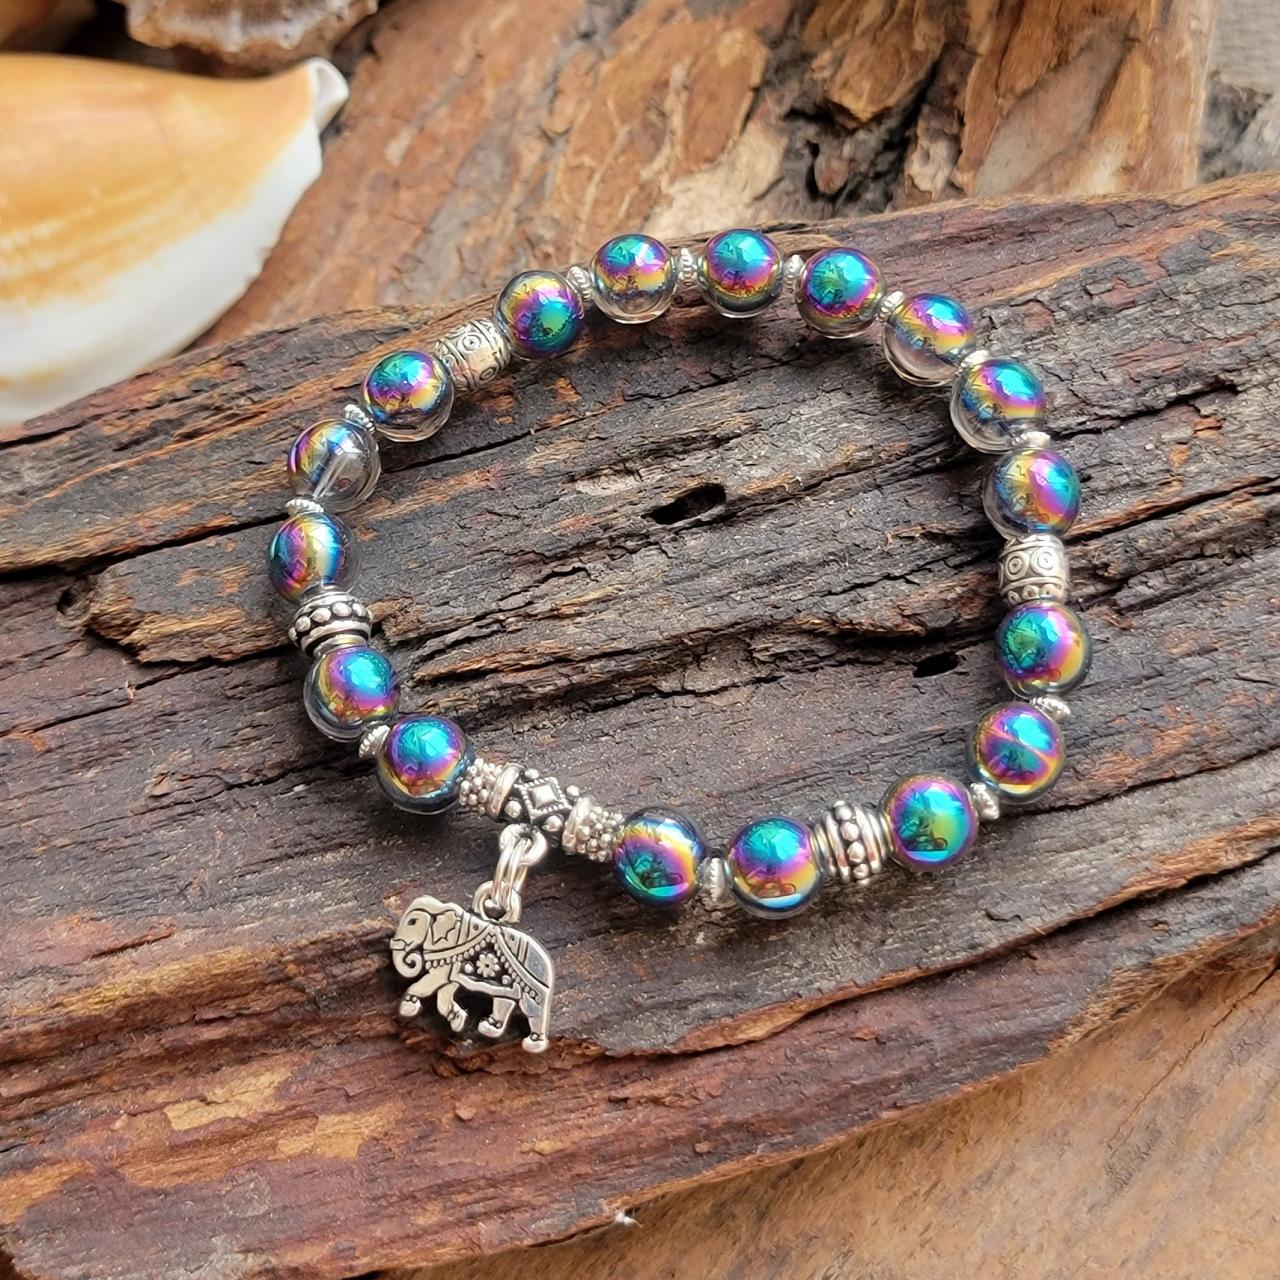 Titanium Silver Rainbow Quartz Natural Healing Gemstone Bracelet With Elephant Charm